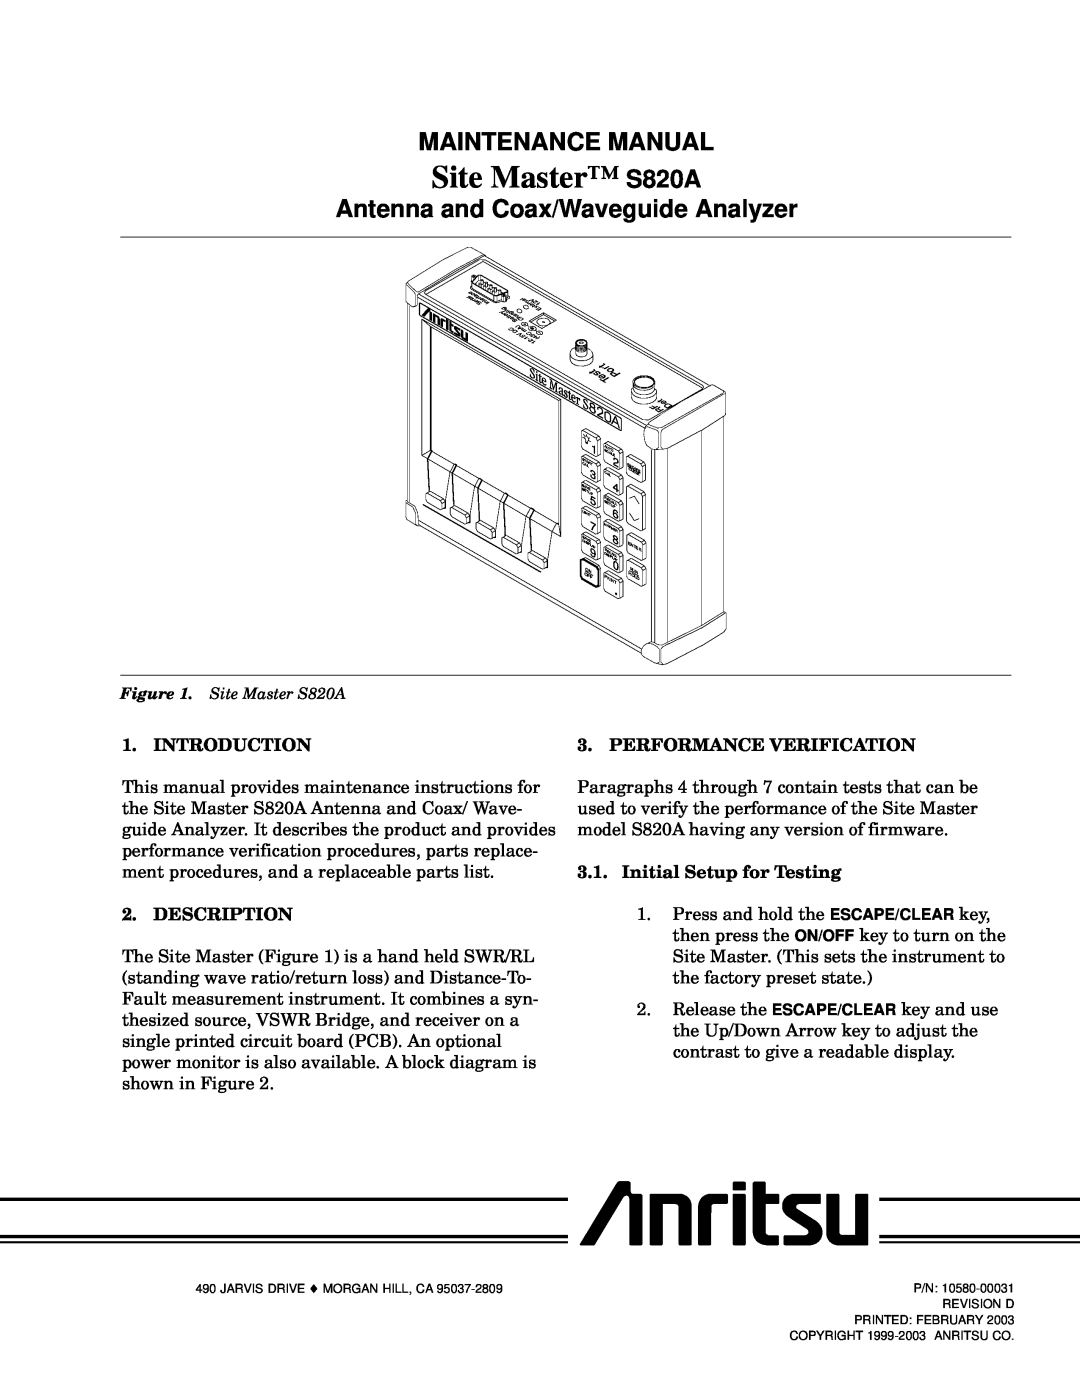 Anritsu manual Introduction, Performance Verification, Description, Initial Setup for Testing, Site Master S820A 